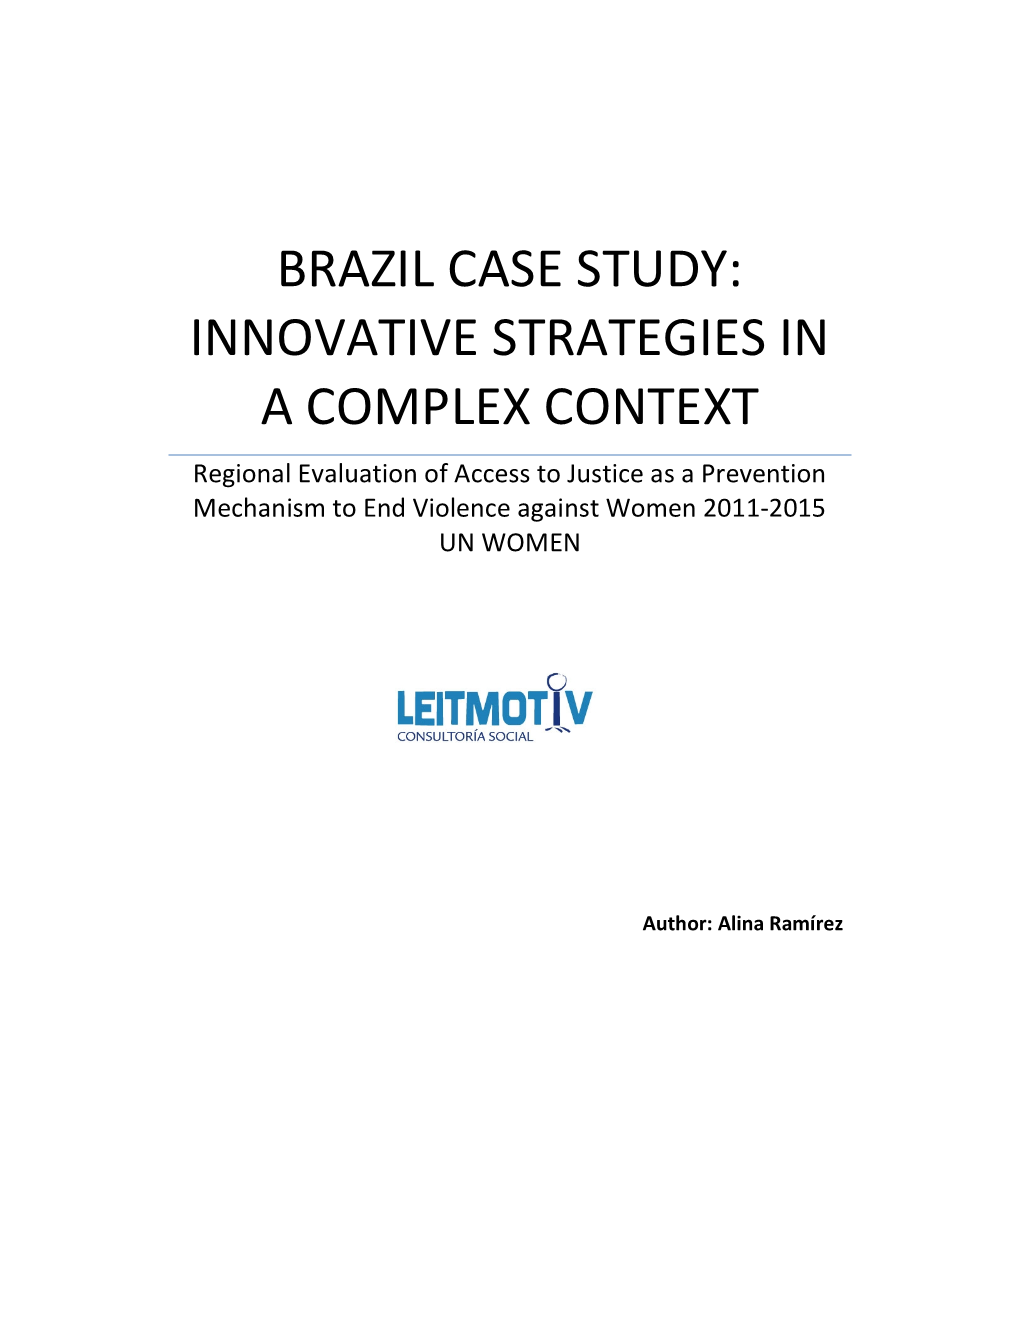 Brazil Case Study: Innovative Strategies in a Complex